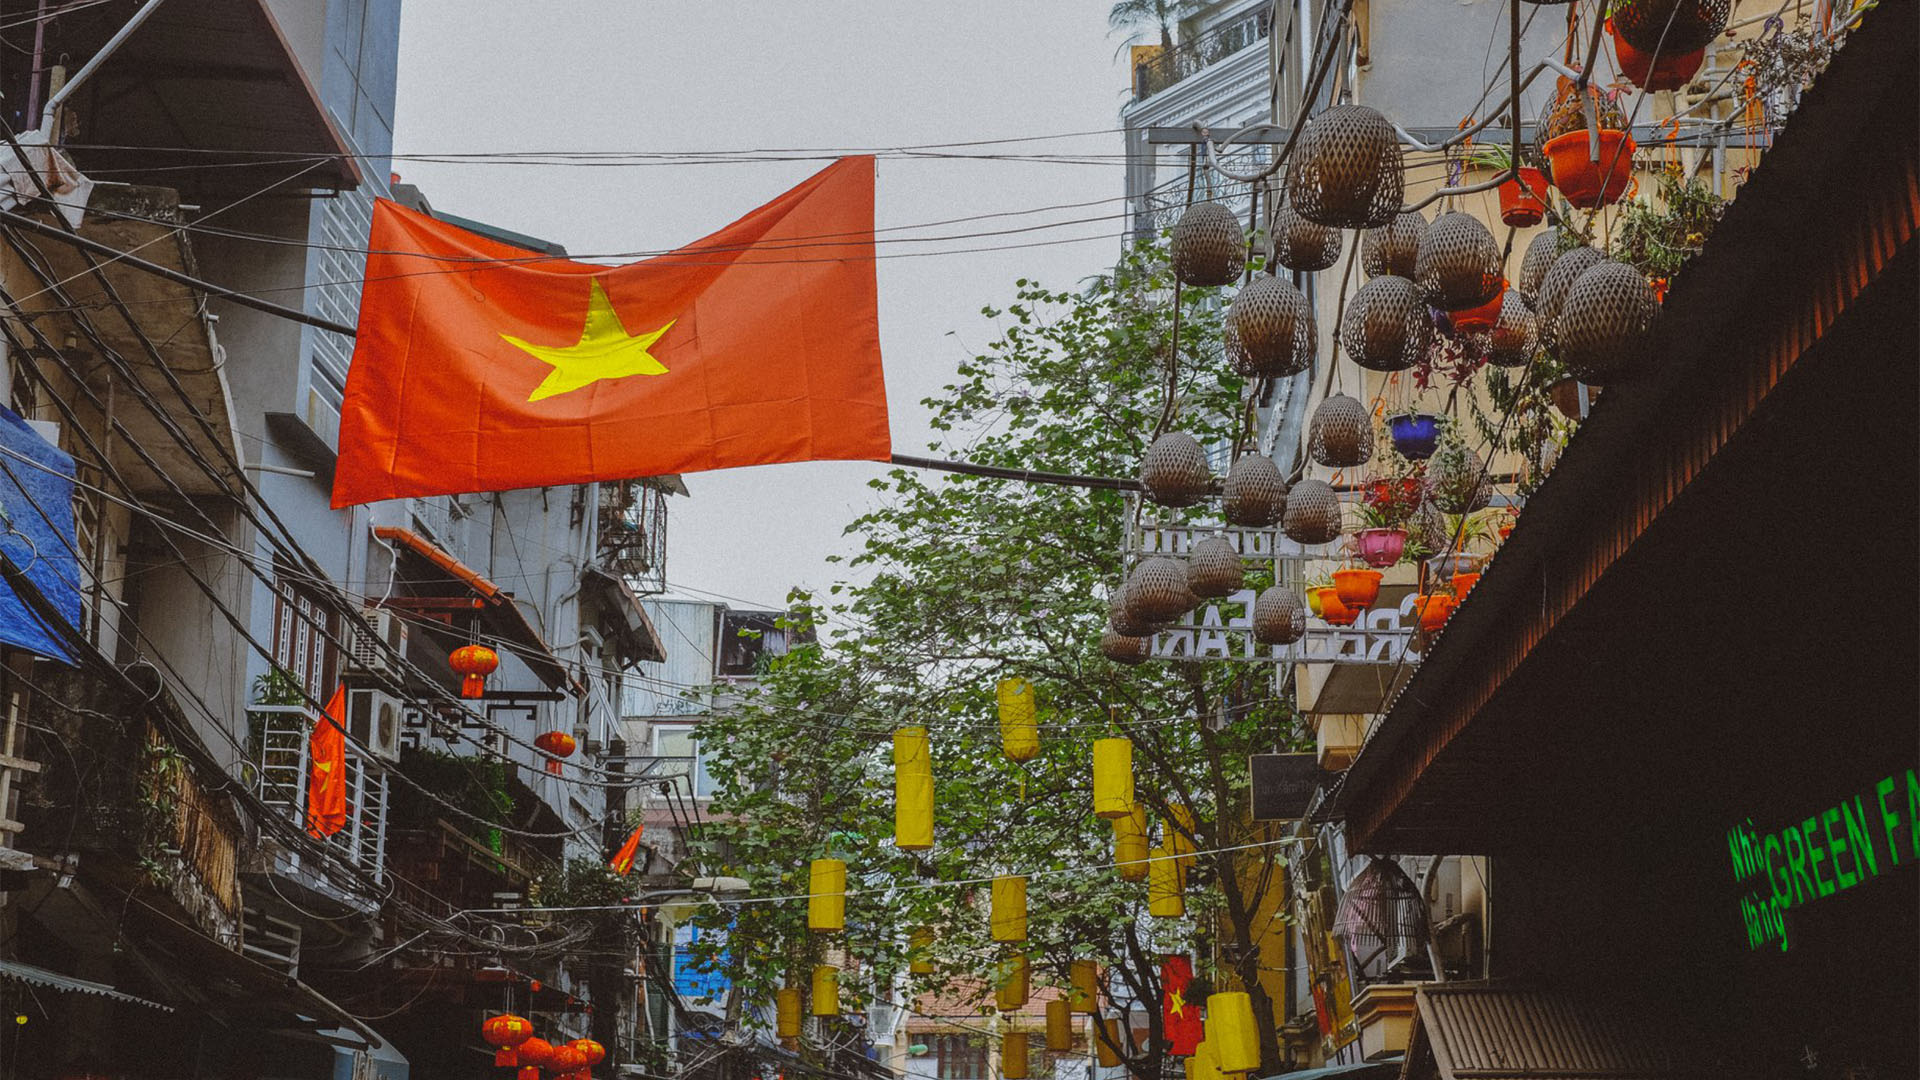 Hà Nội wallpaper with flag